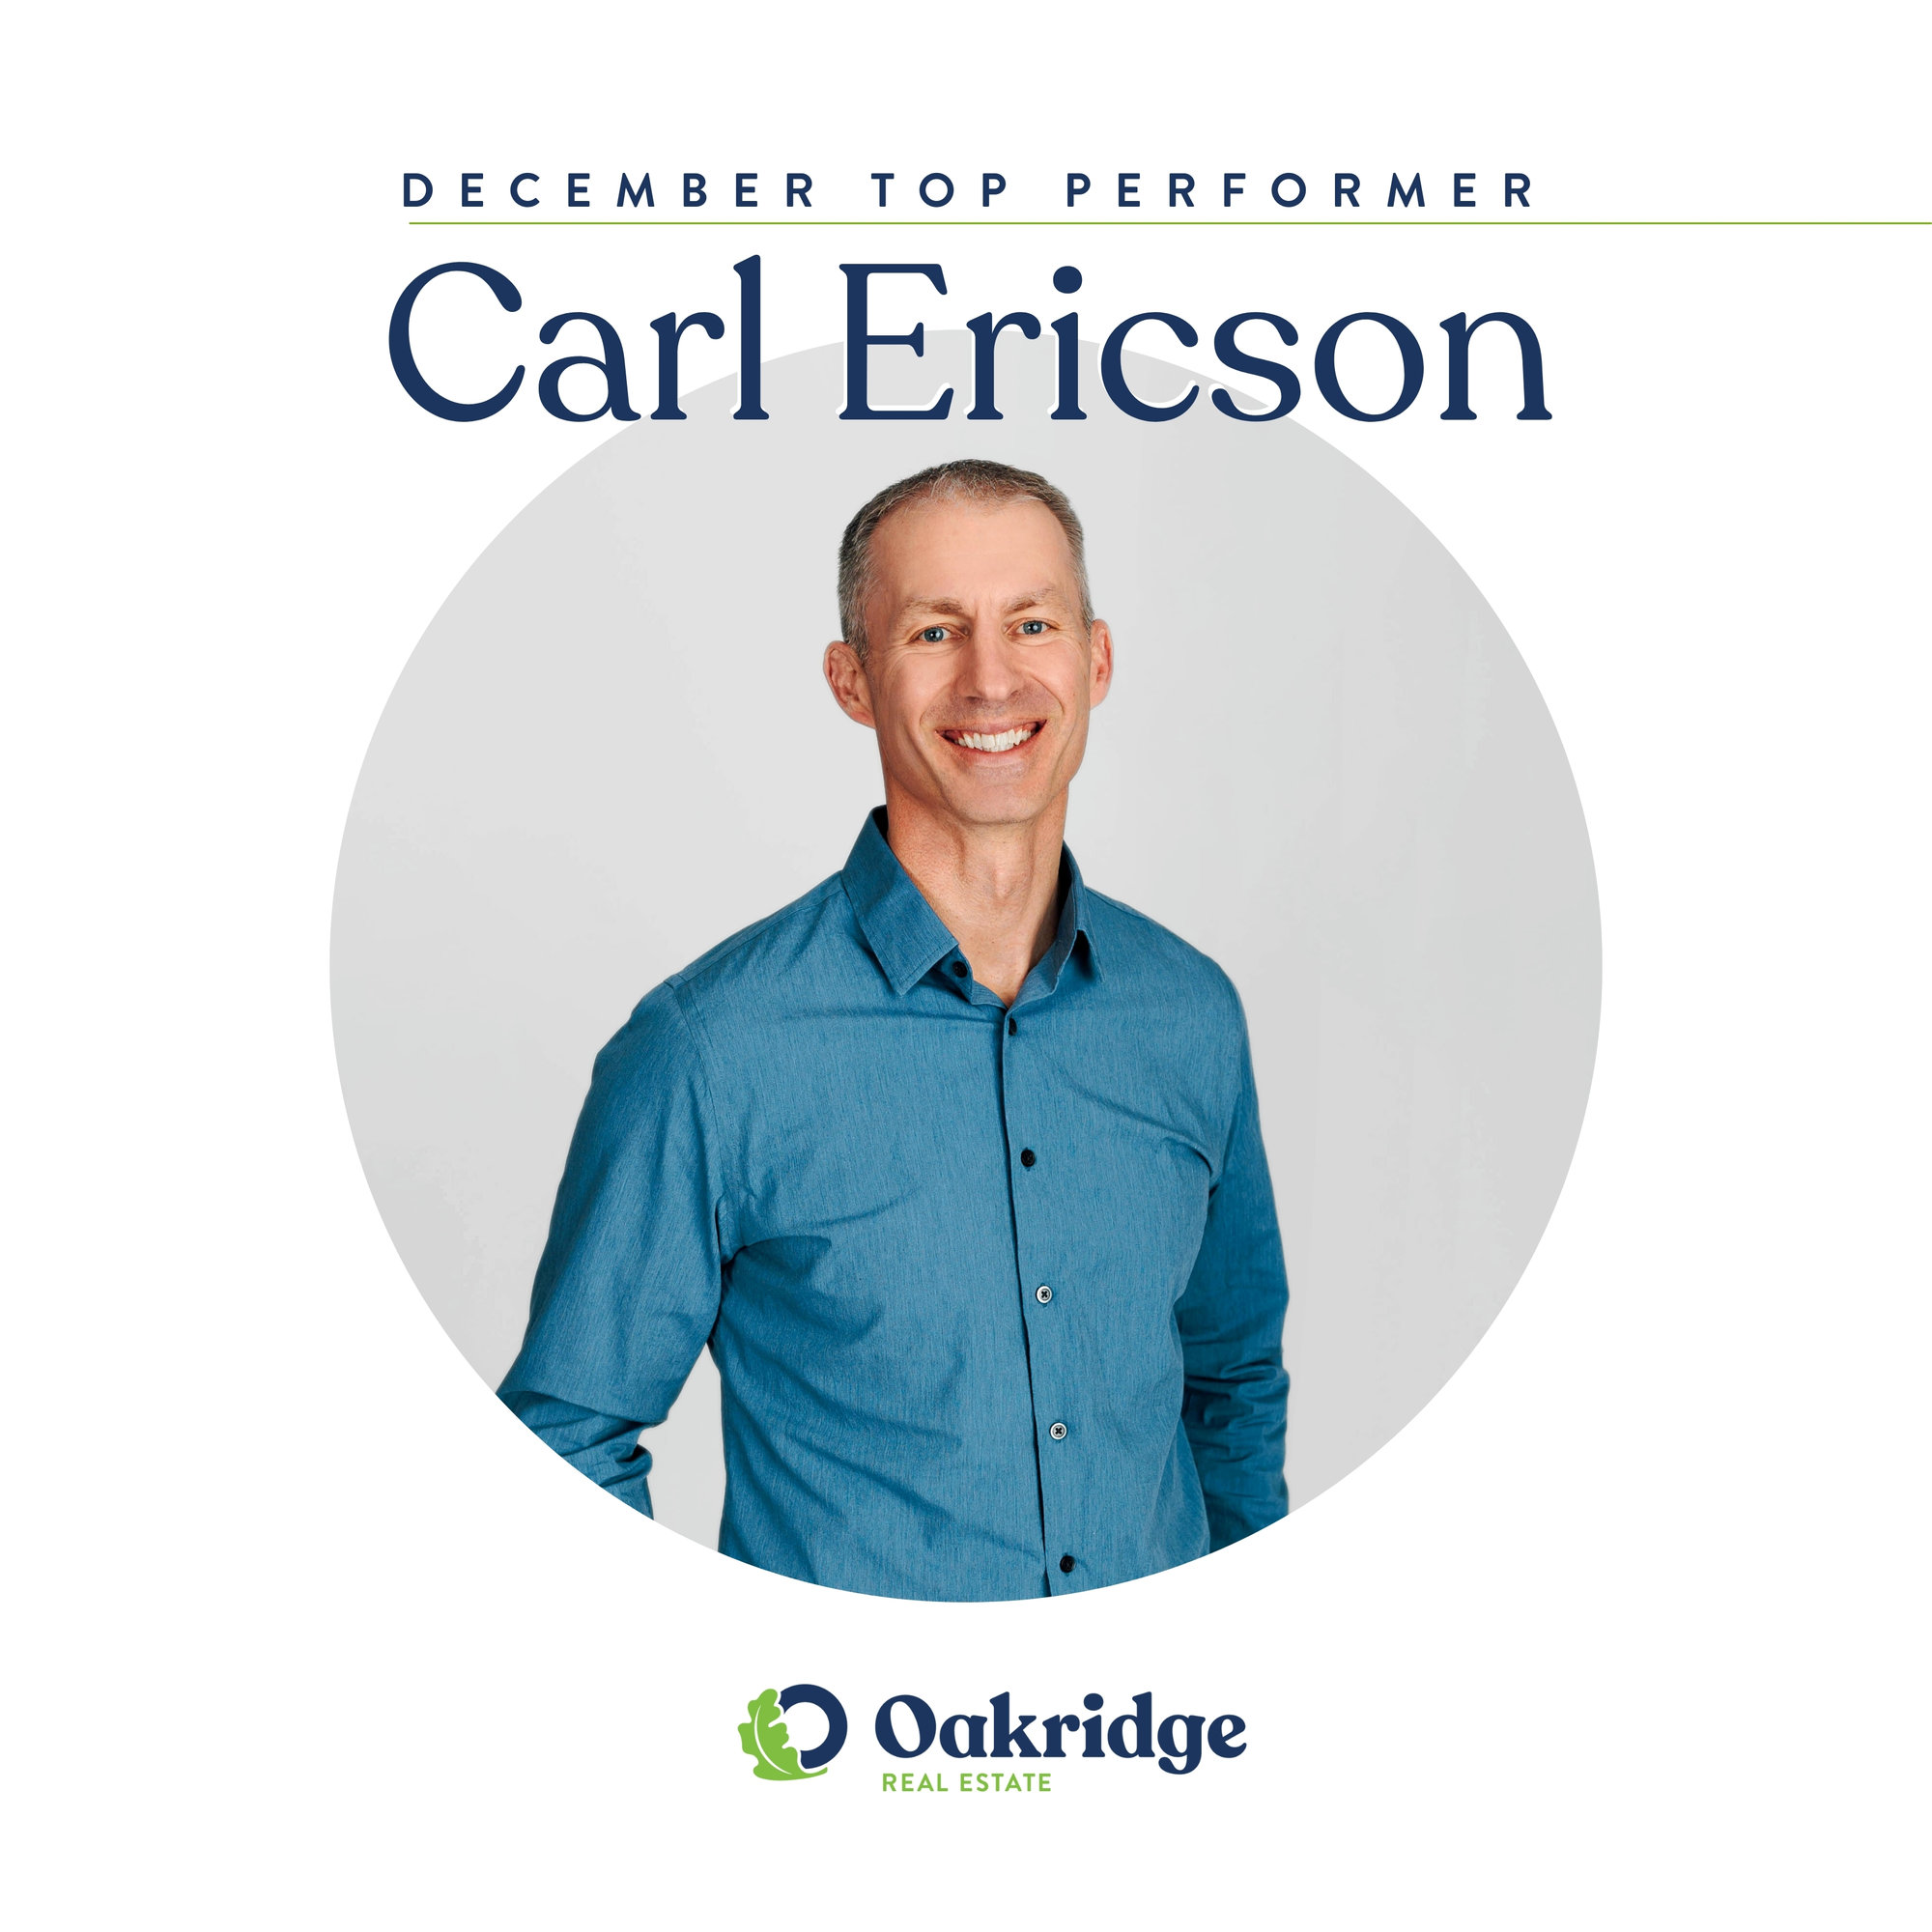 carl ericson oakridge real estate december top performer 